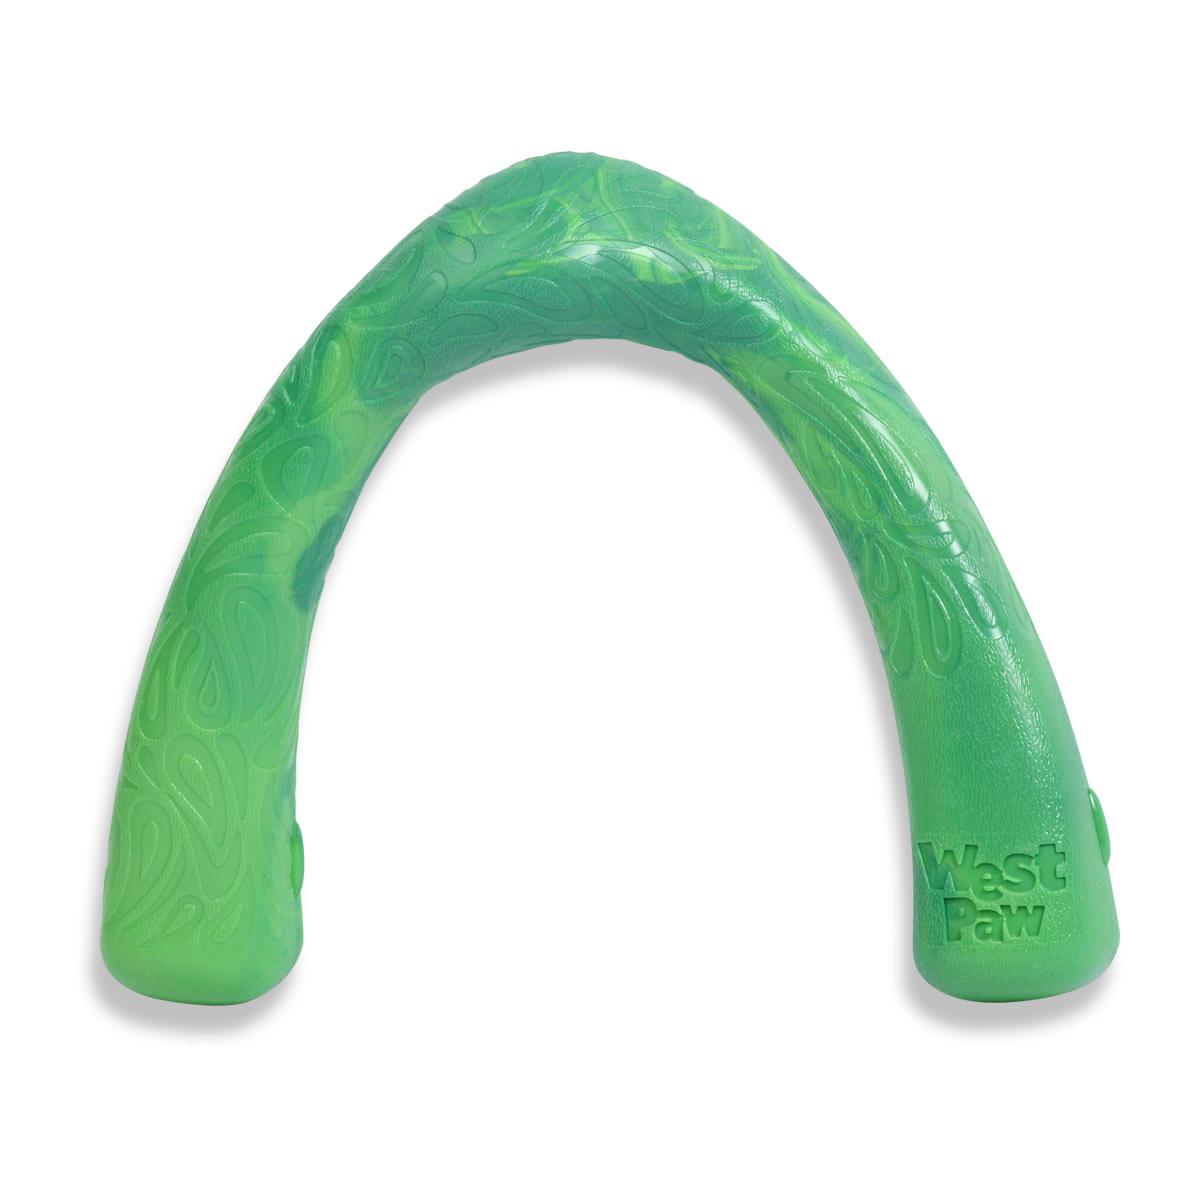 West Paw Seaflex Snorkl Dog Toy - Emerald